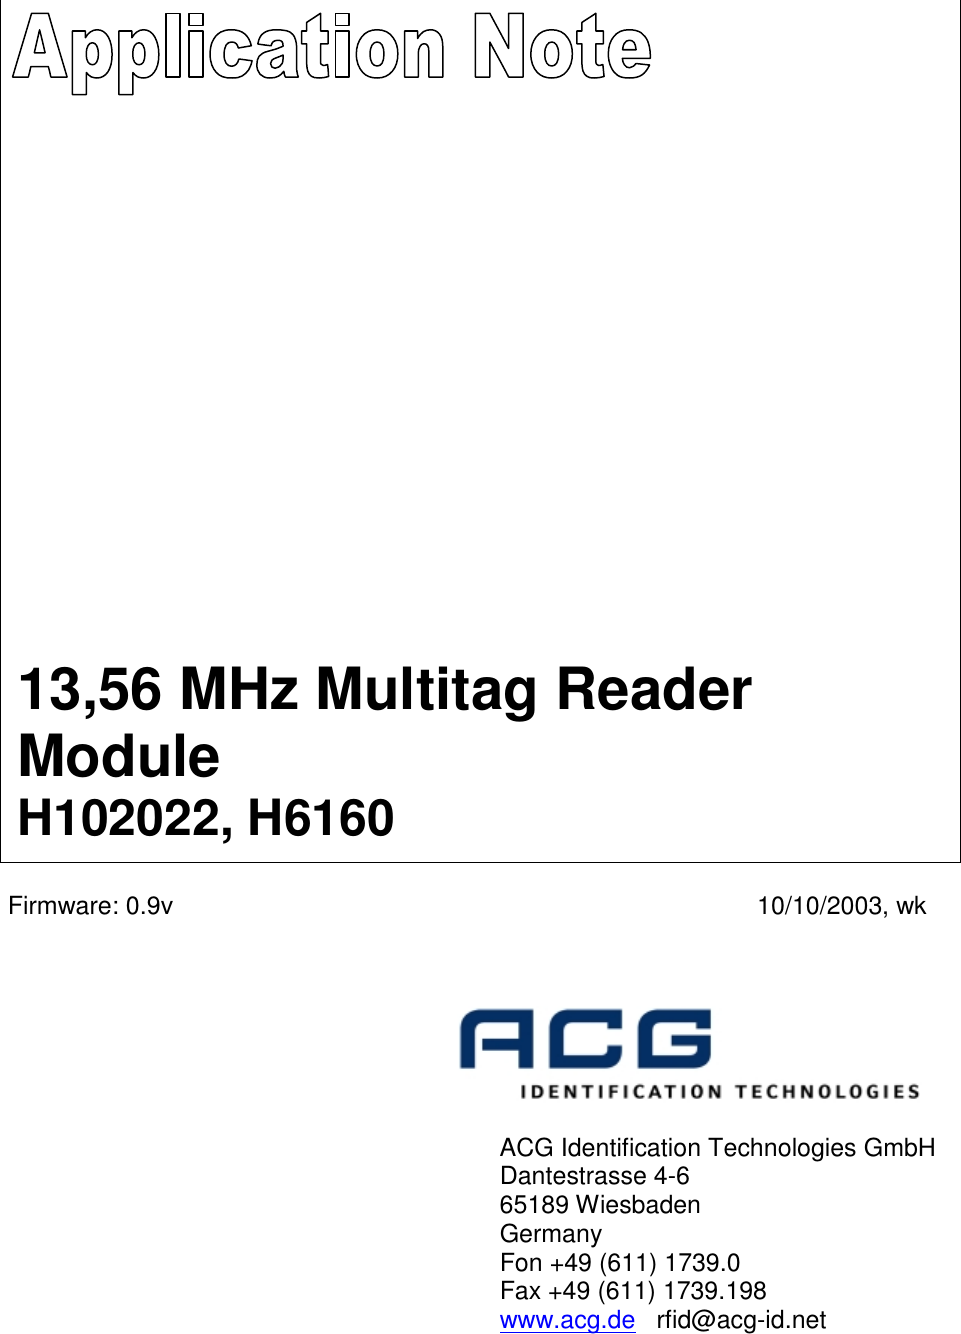                                 Firmware: 0.9v  10/10/2003, wk                  ACG Identification Technologies GmbH       Dantestrasse 4-6       65189 Wiesbaden        Germany       Fon +49 (611) 1739.0       Fax +49 (611) 1739.198       www.acg.de   rfid@acg-id.net  13,56 MHz Multitag Reader Module H102022, H6160 